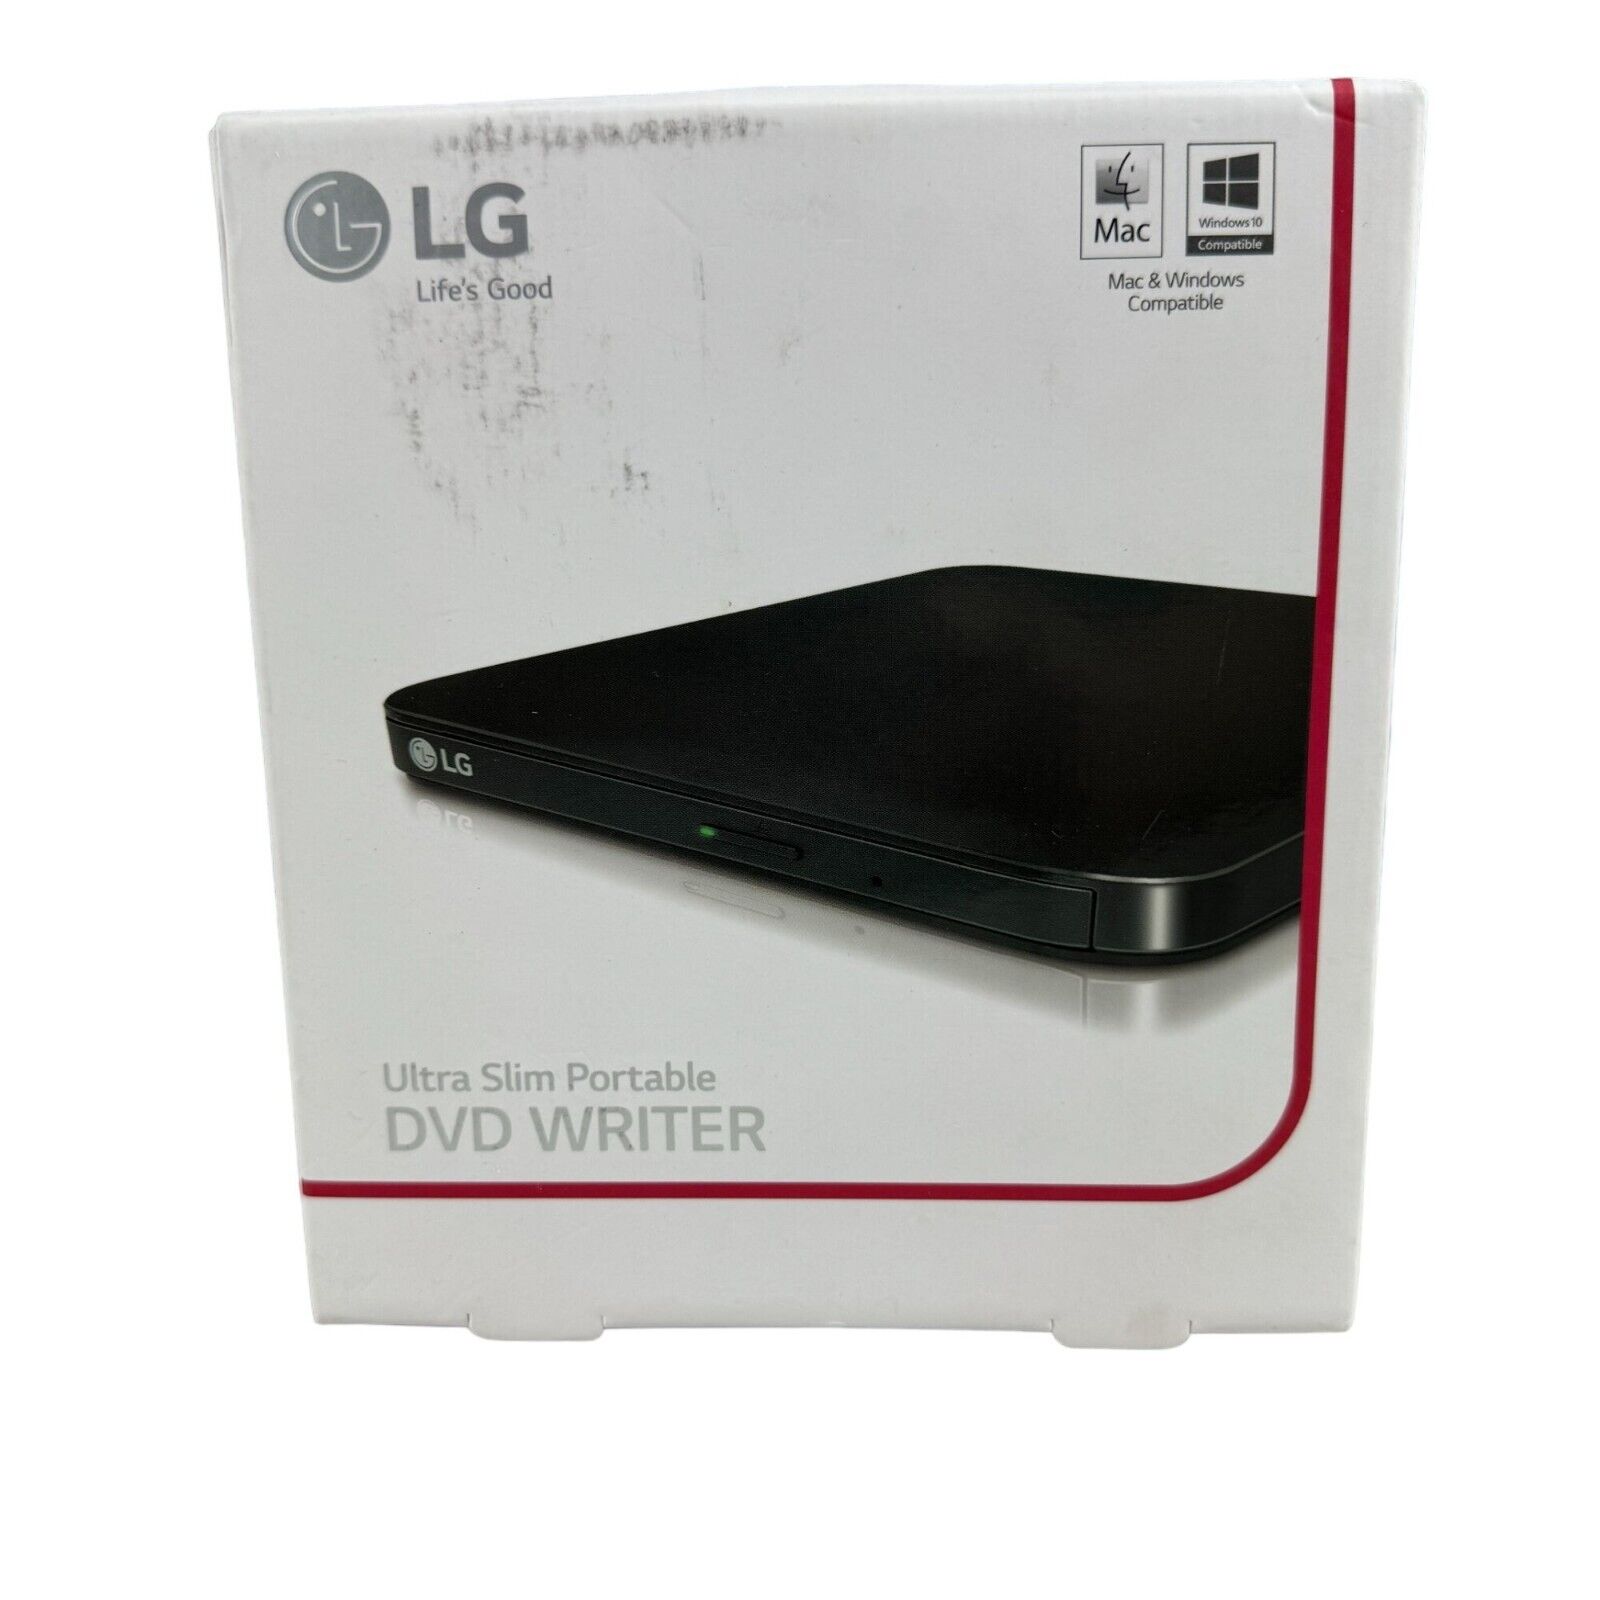 LG SP80NB80 External Drive Ultra Slim Portable DVD Writer Playback Mac & Windows